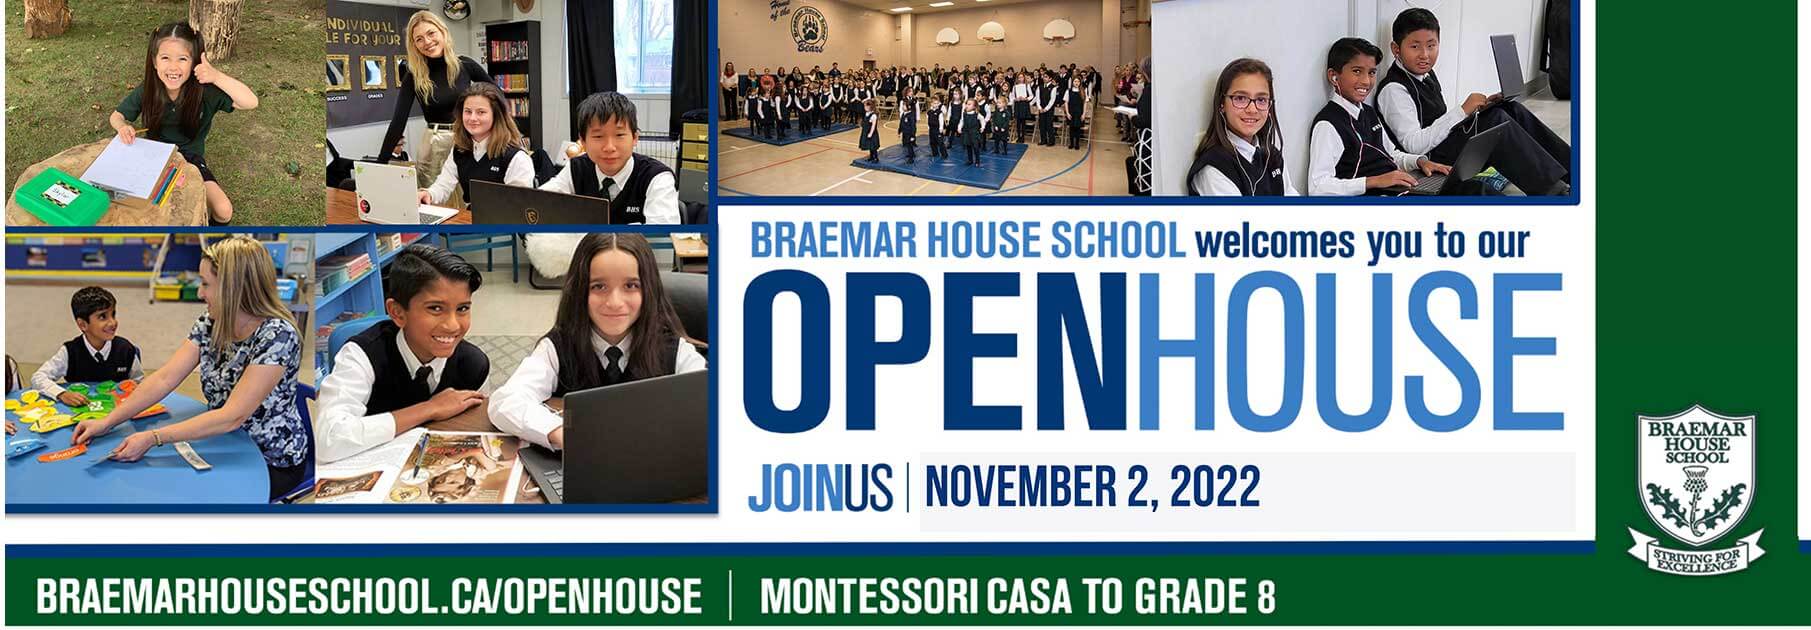 Braemar House School Profile Image